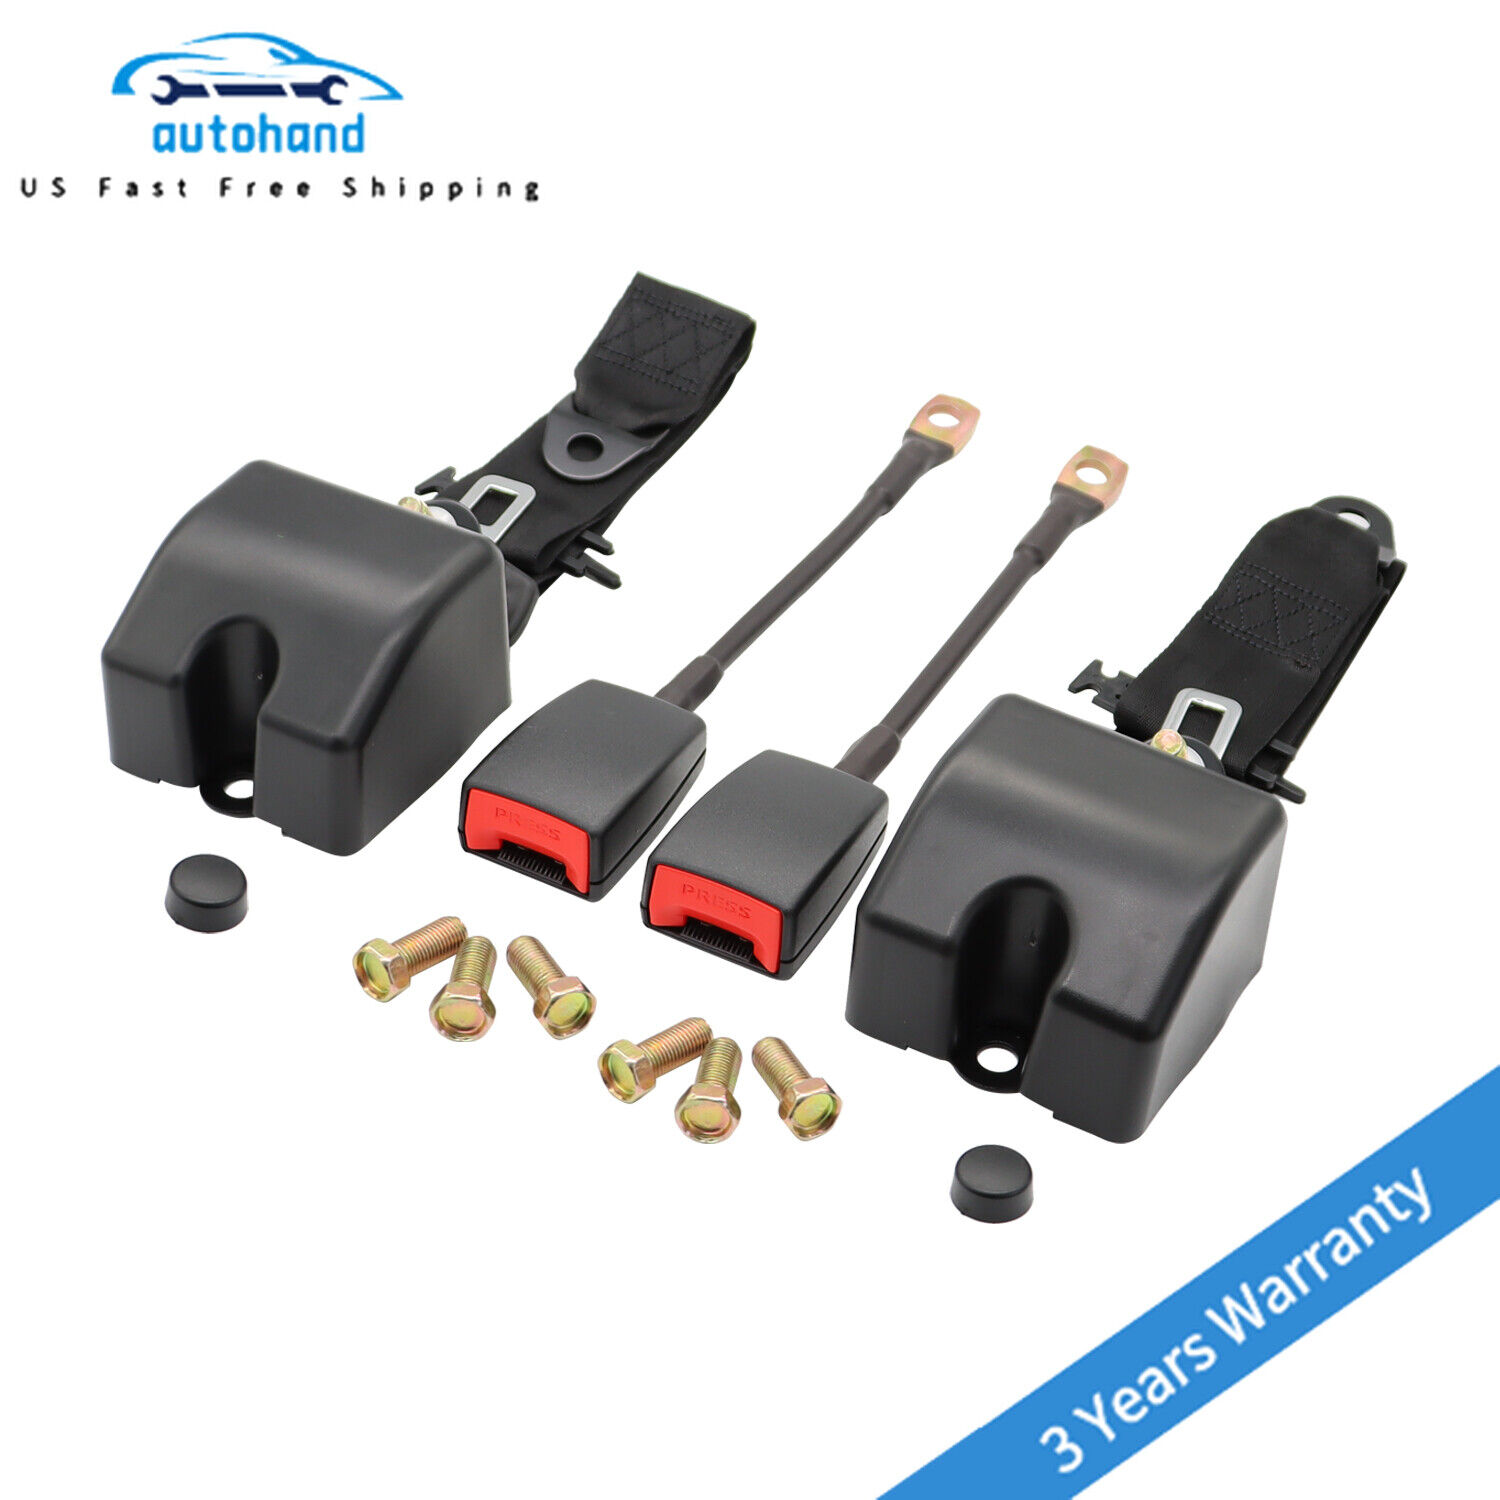 2 Pack Black Universal 3 Point Retractable Adjustable Car Seat Belt